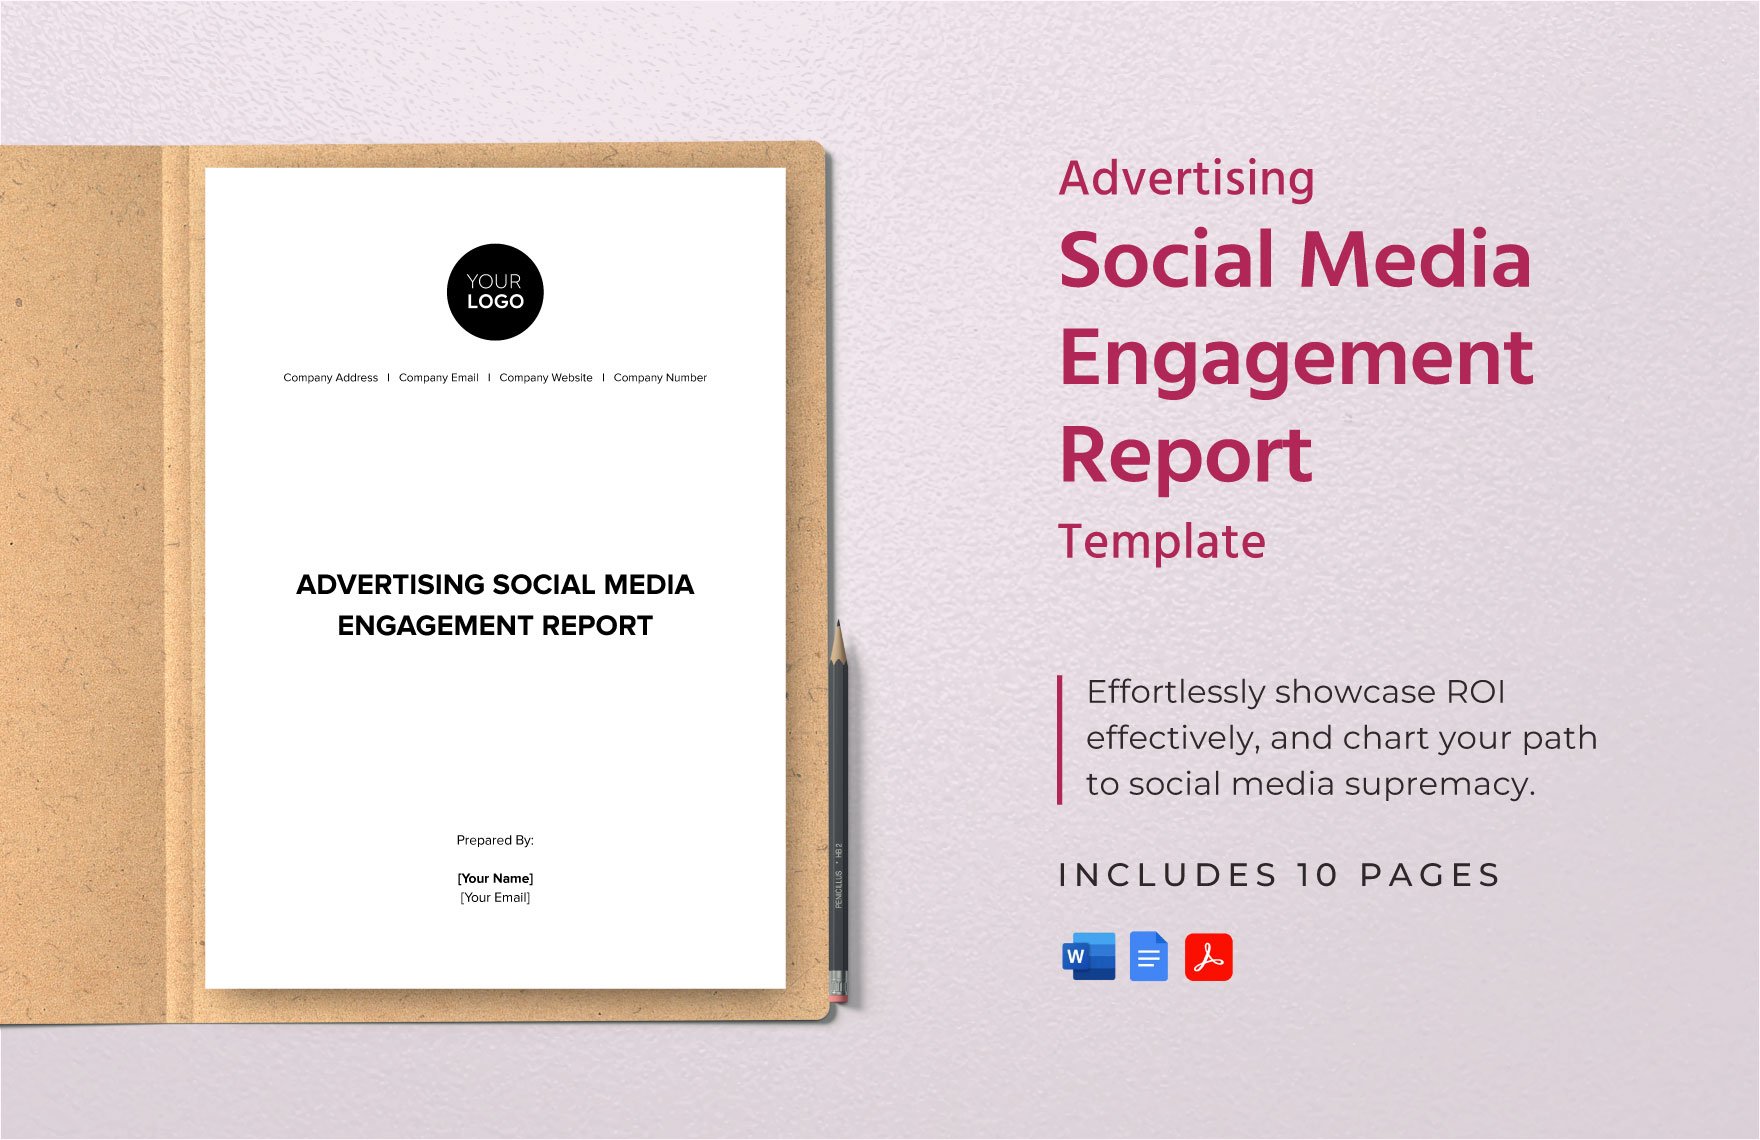 Advertising Social Media Engagement Report Template